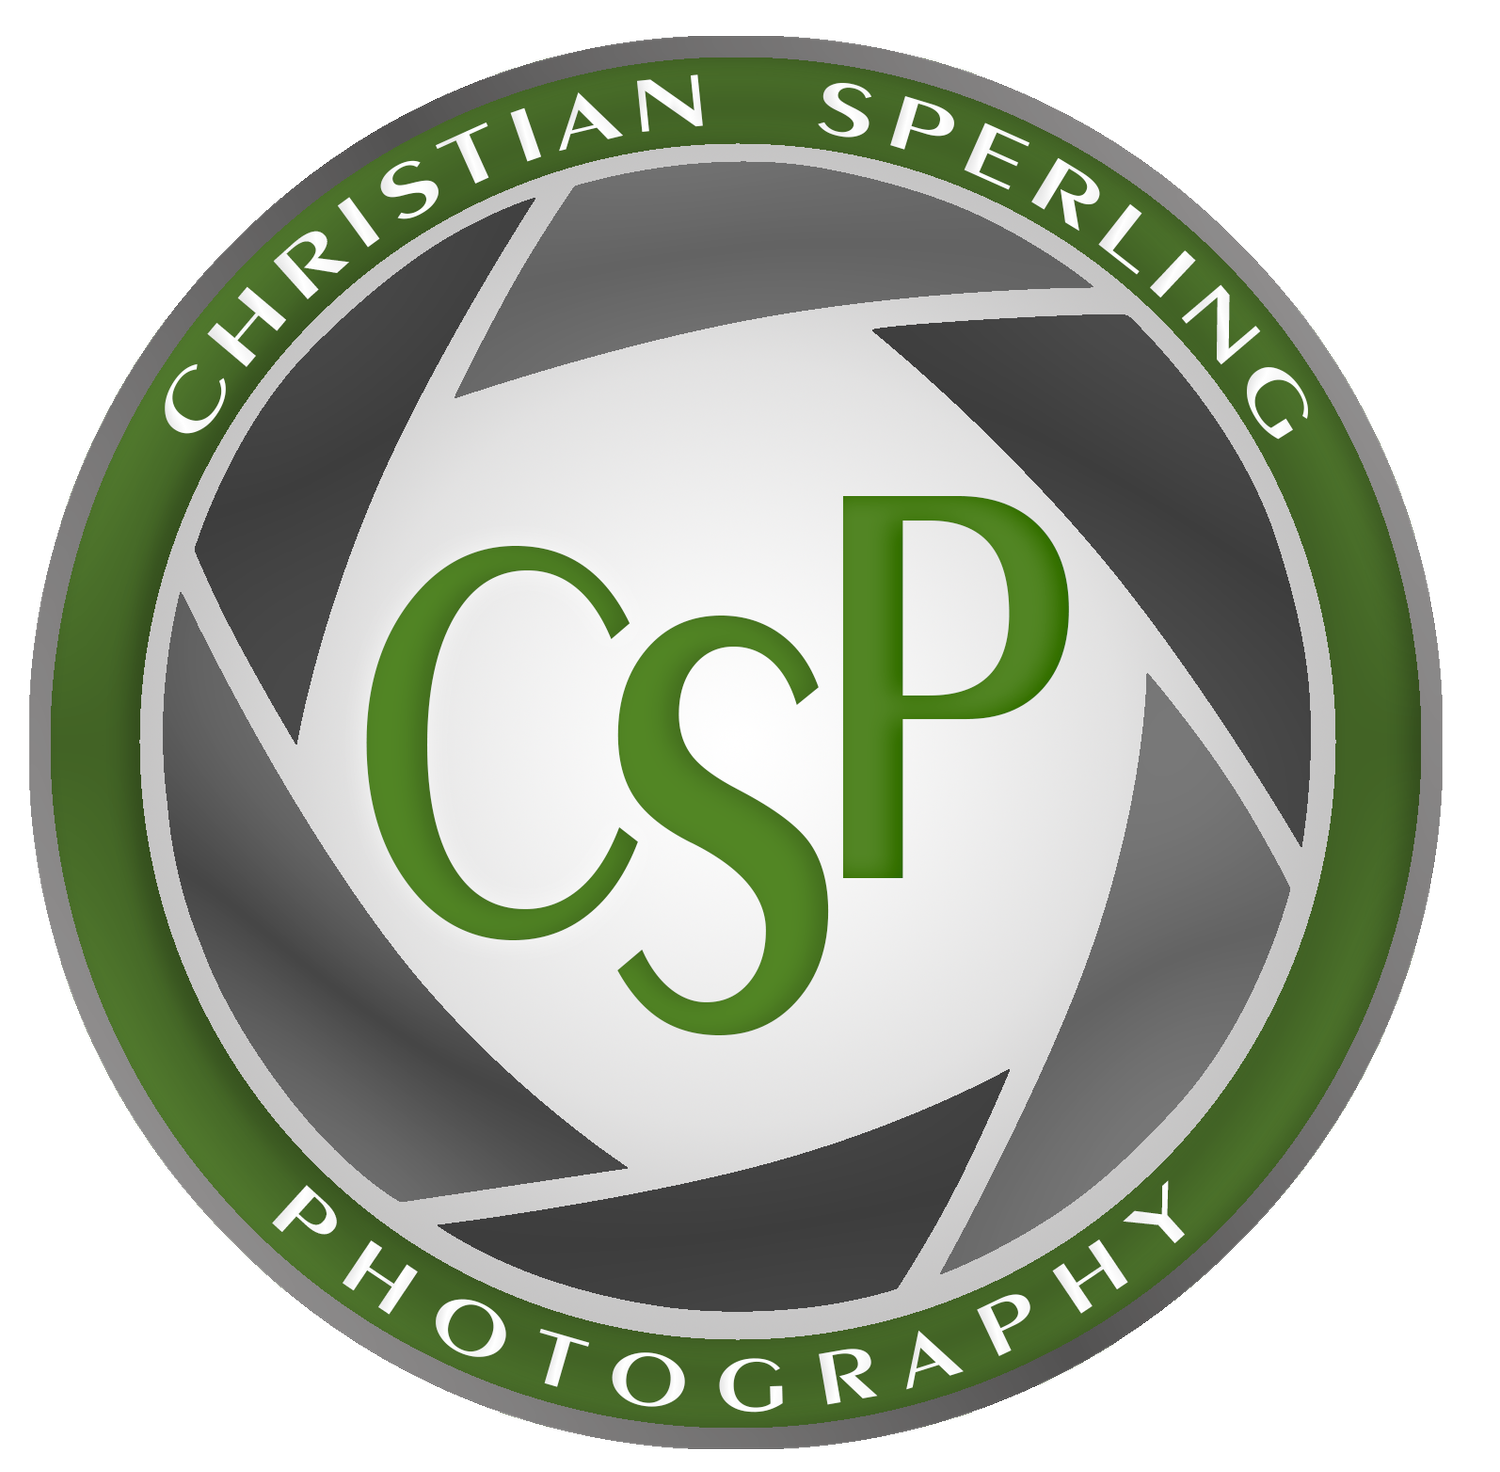 Christian Sperling Photography